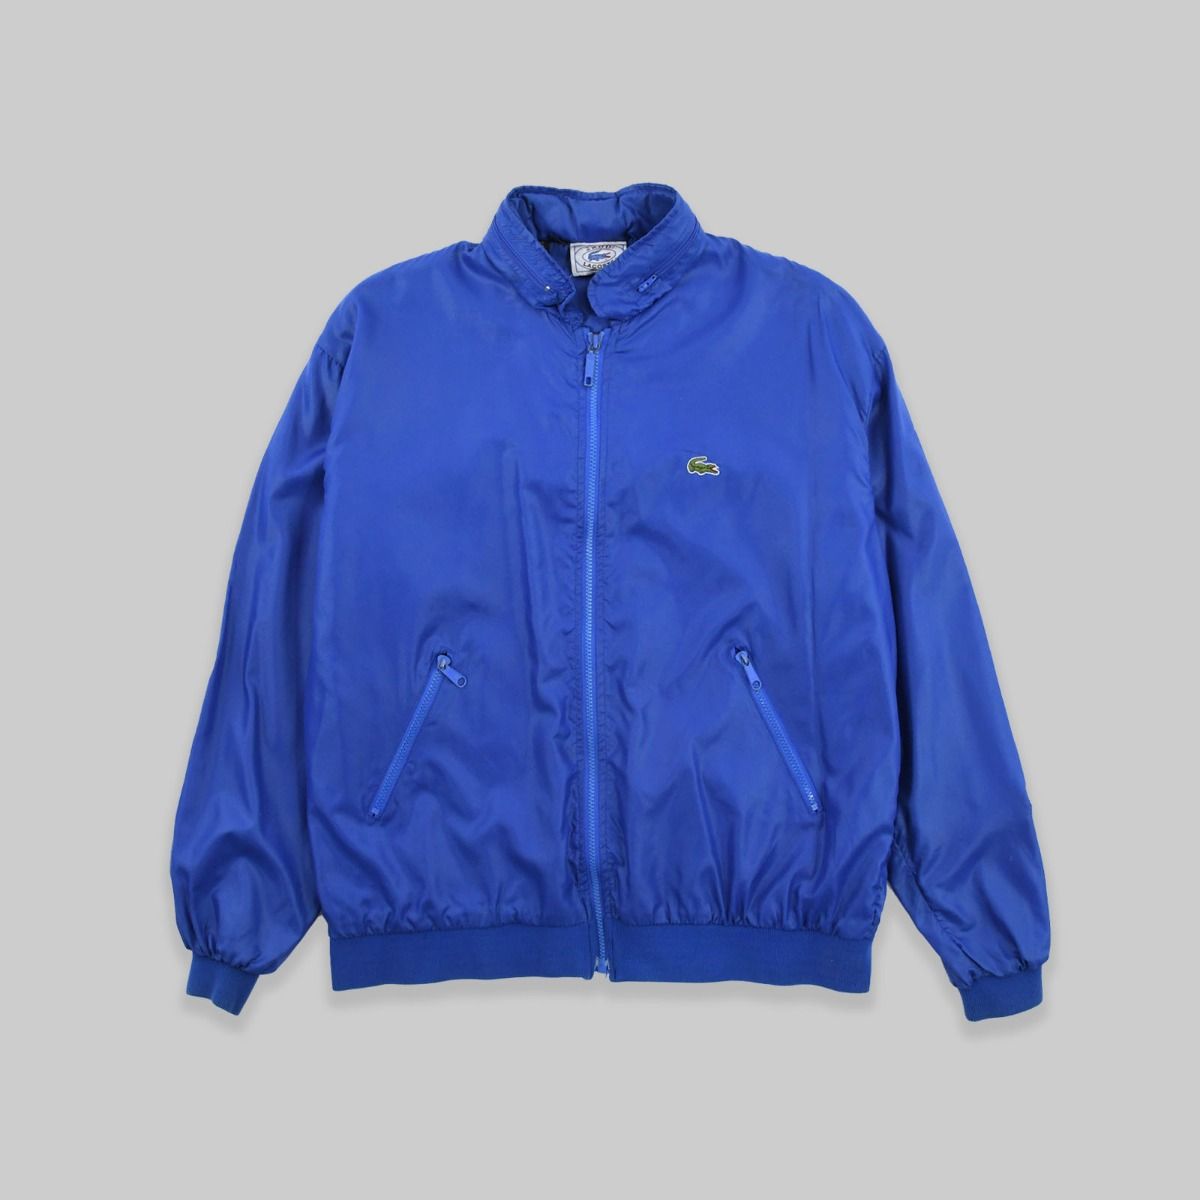 Lacoste IZOD 1980s Blue Shell Jacket